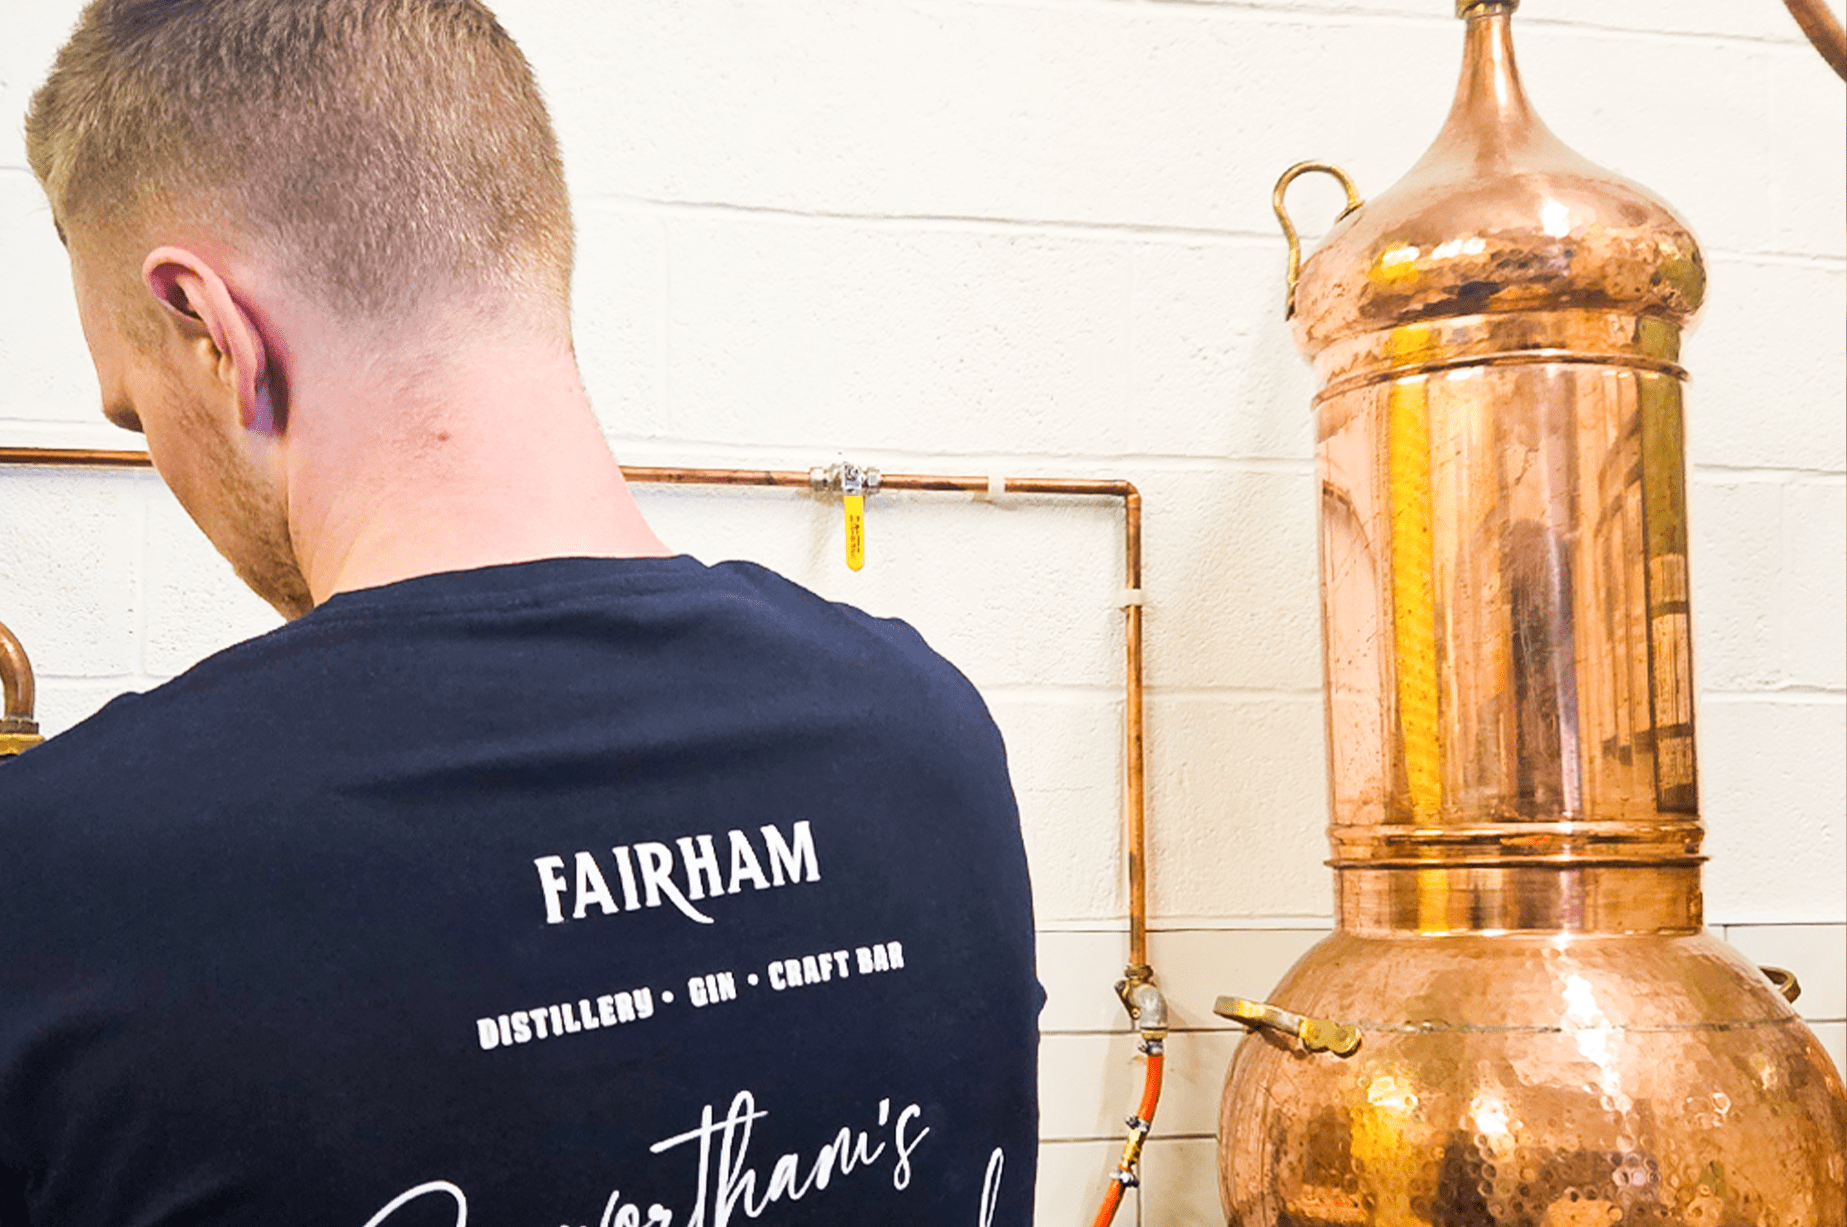 award-winning UK distillery from Lancashire. Visit uk distillery and bar